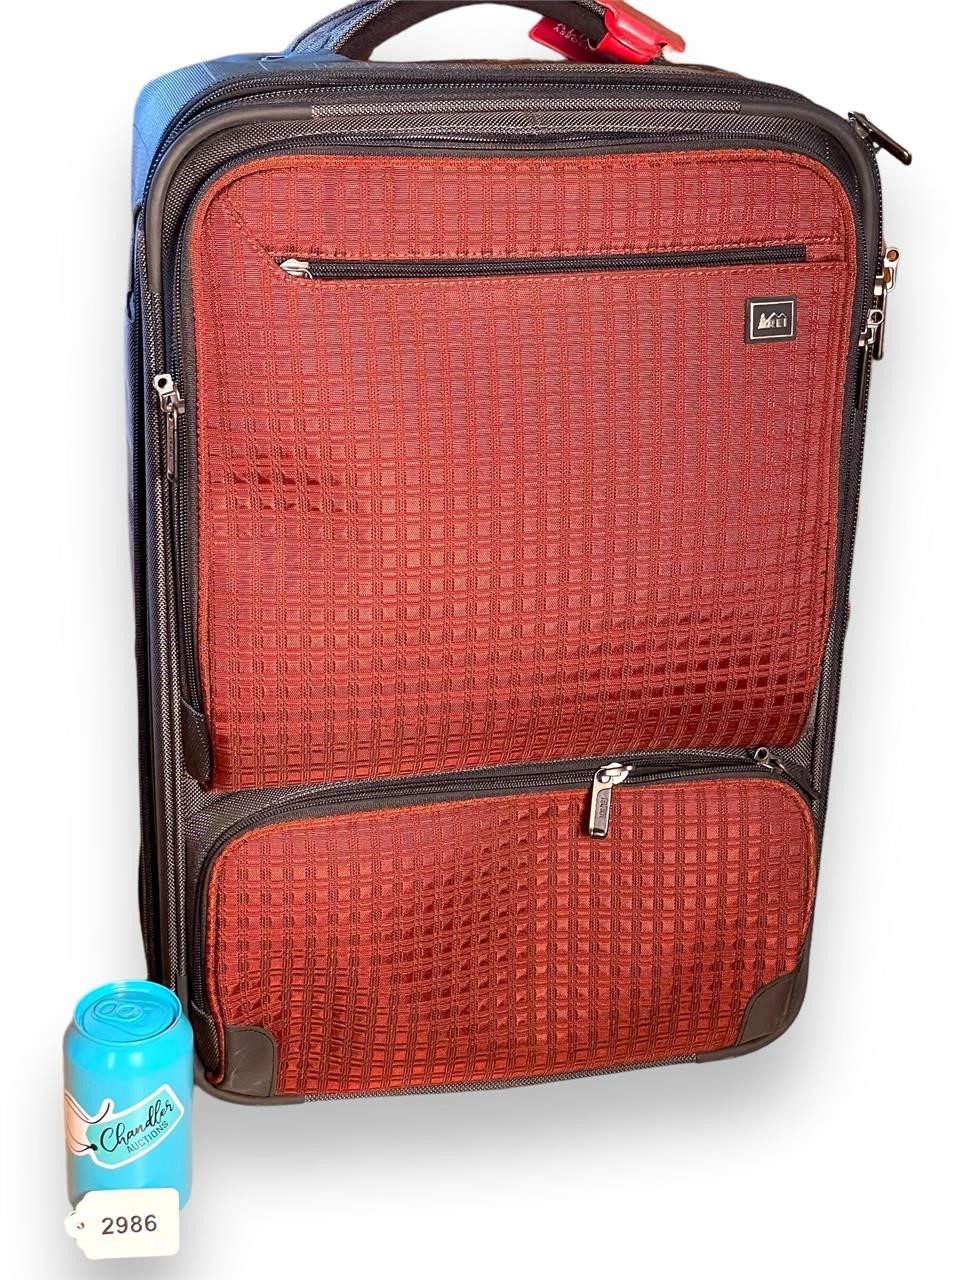 REI Suitcase Luggage Wheels